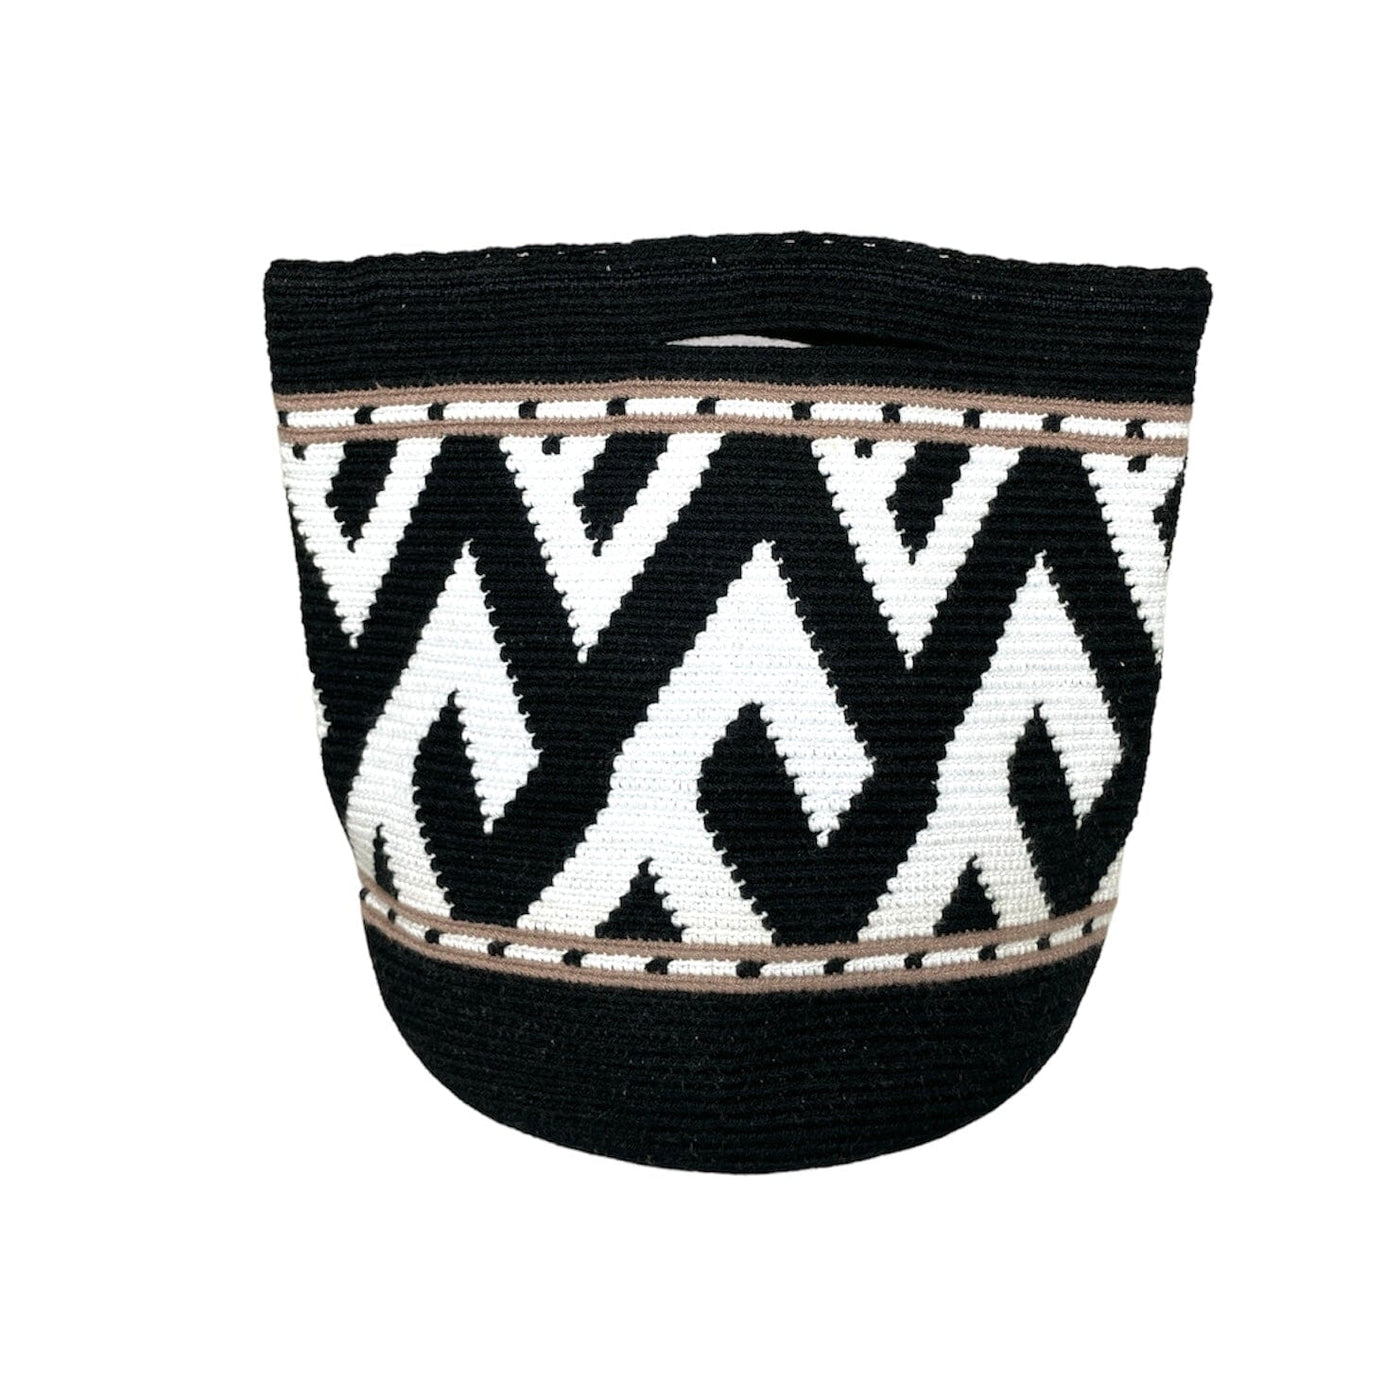 Fashion Clutch Bag | Black Crochet Clutch | Neutral Top Handle Purse by Colorful 4U